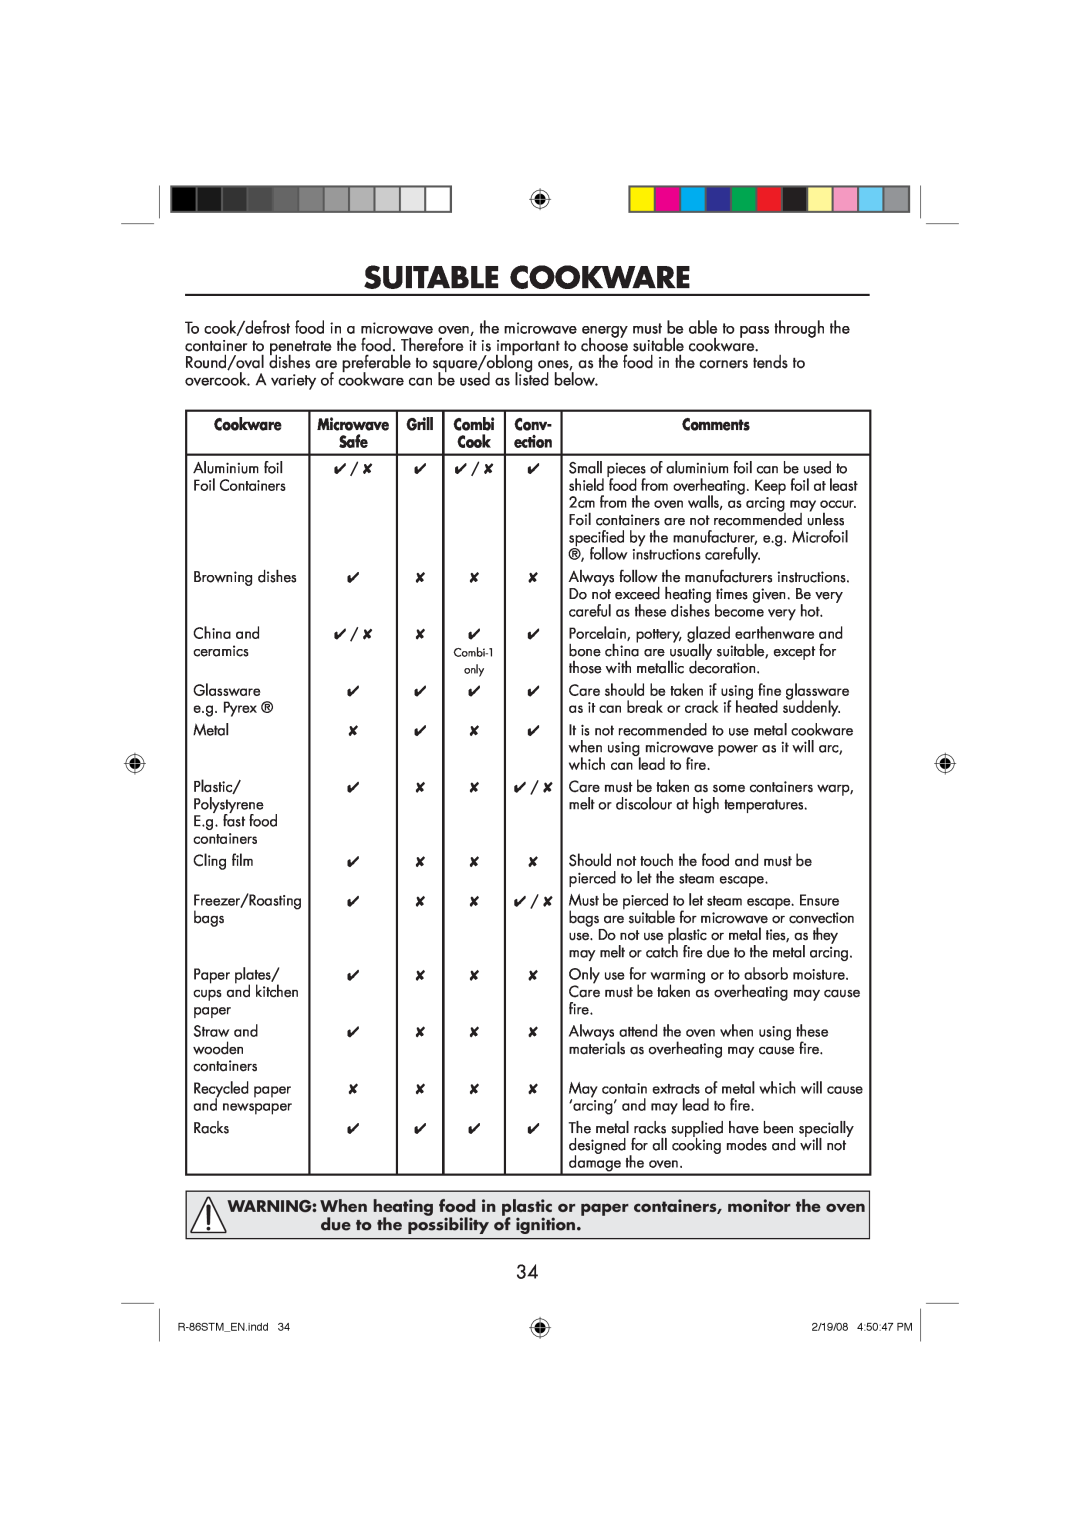 Sharp R-86STM manual Suitable Cookware, Grill, Combi, Conv, Comments, ection 